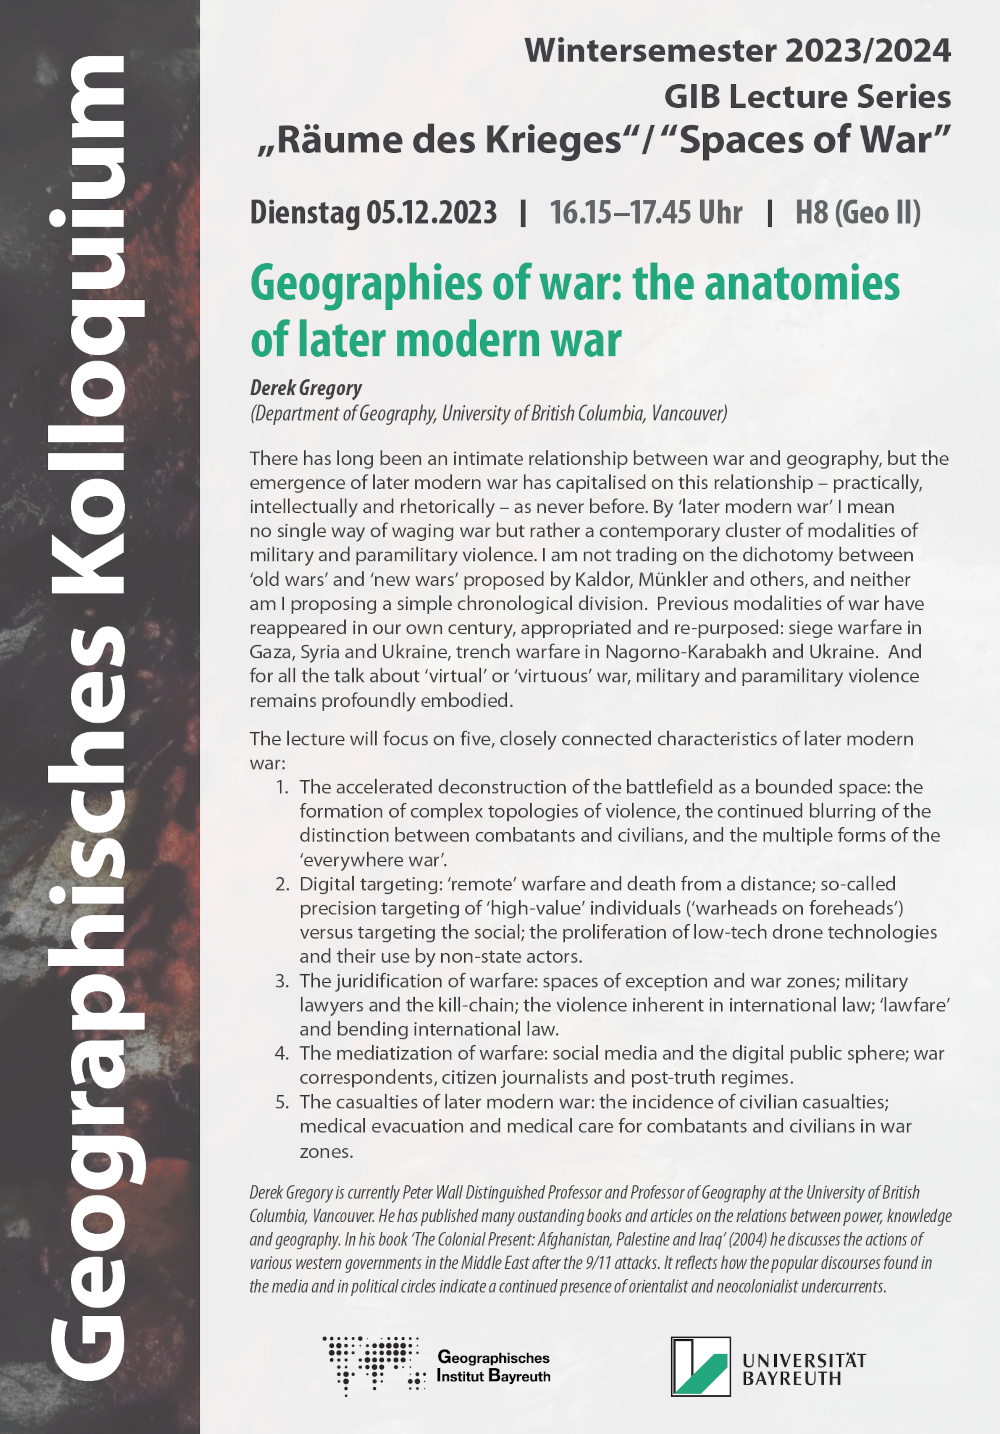 Poster - Talk Derek Gregory "Geographies of War"